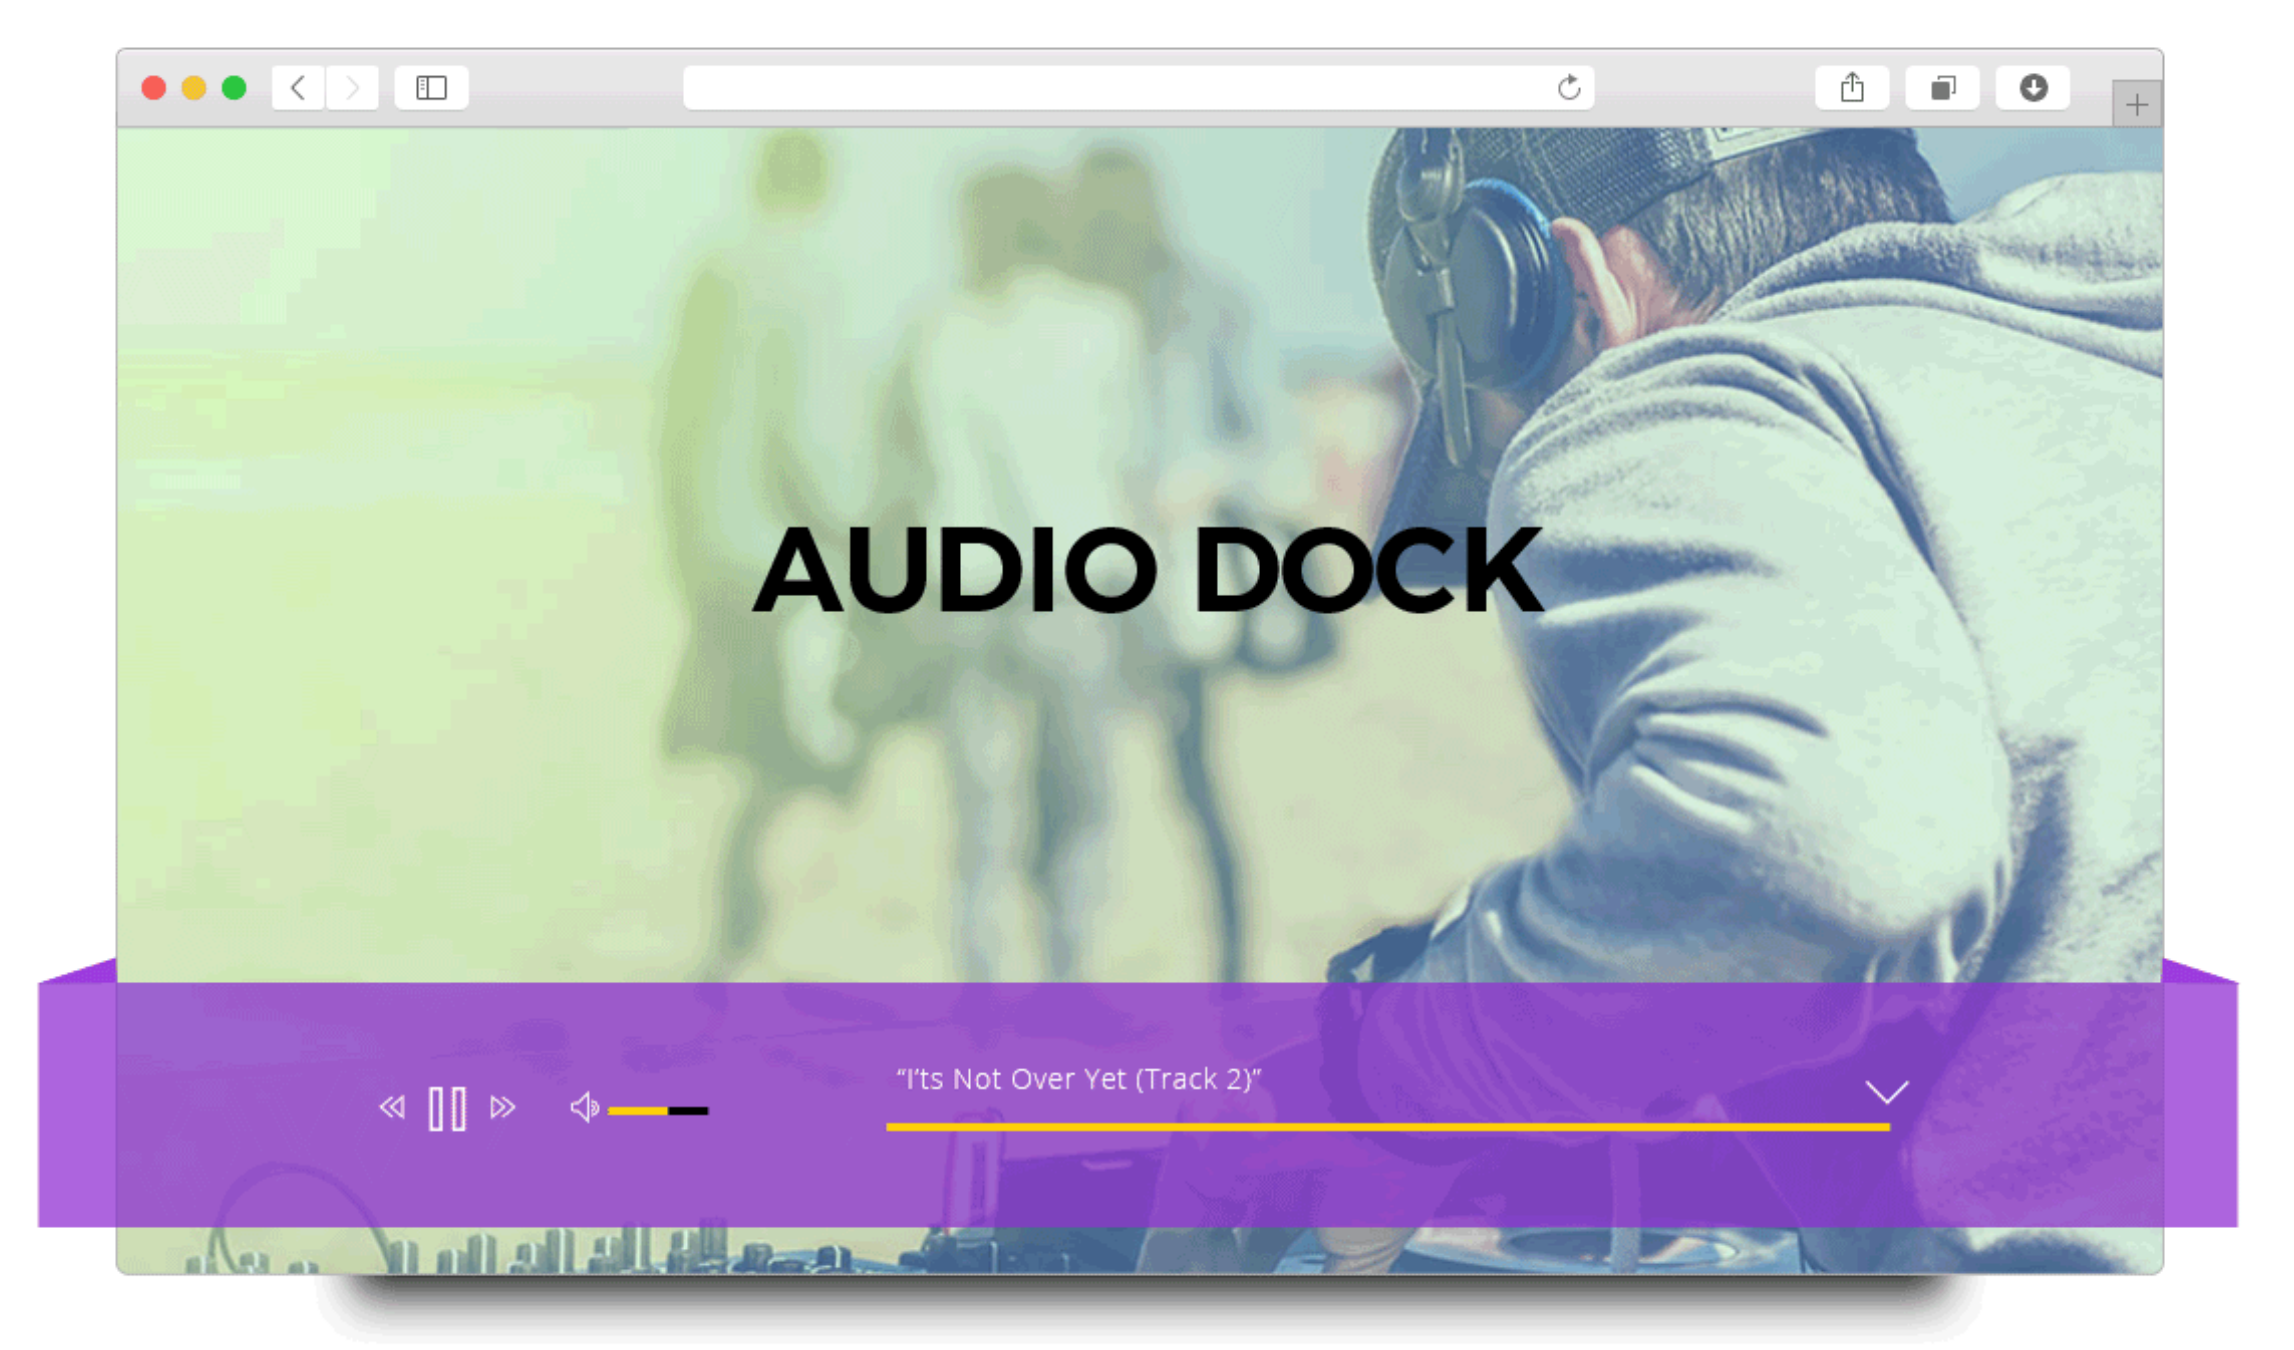 audio dock logo image